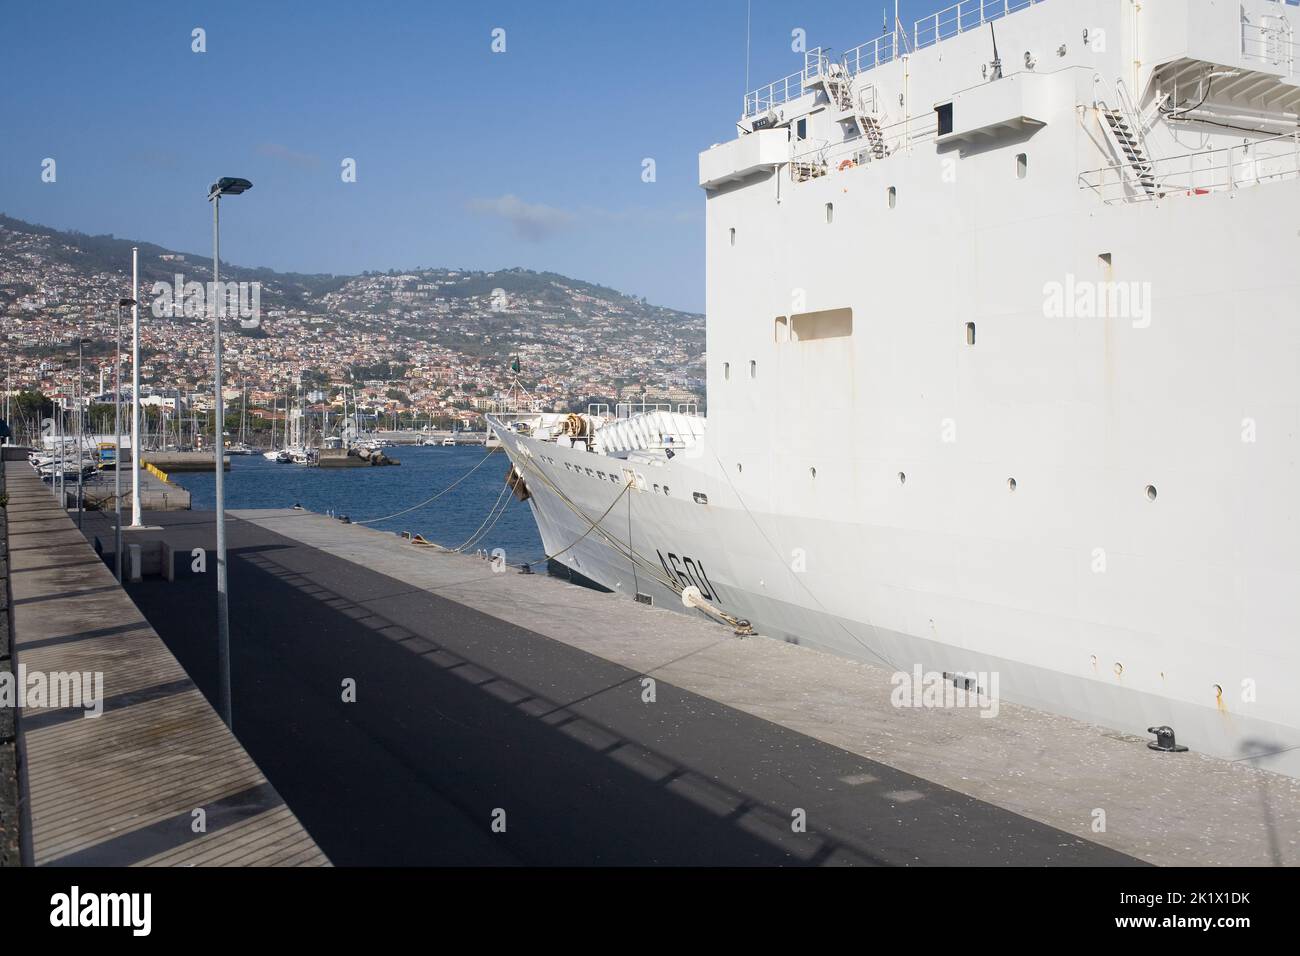 Monge French missile range instrumentation ship moored at Funchal port Madeira Stock Photo